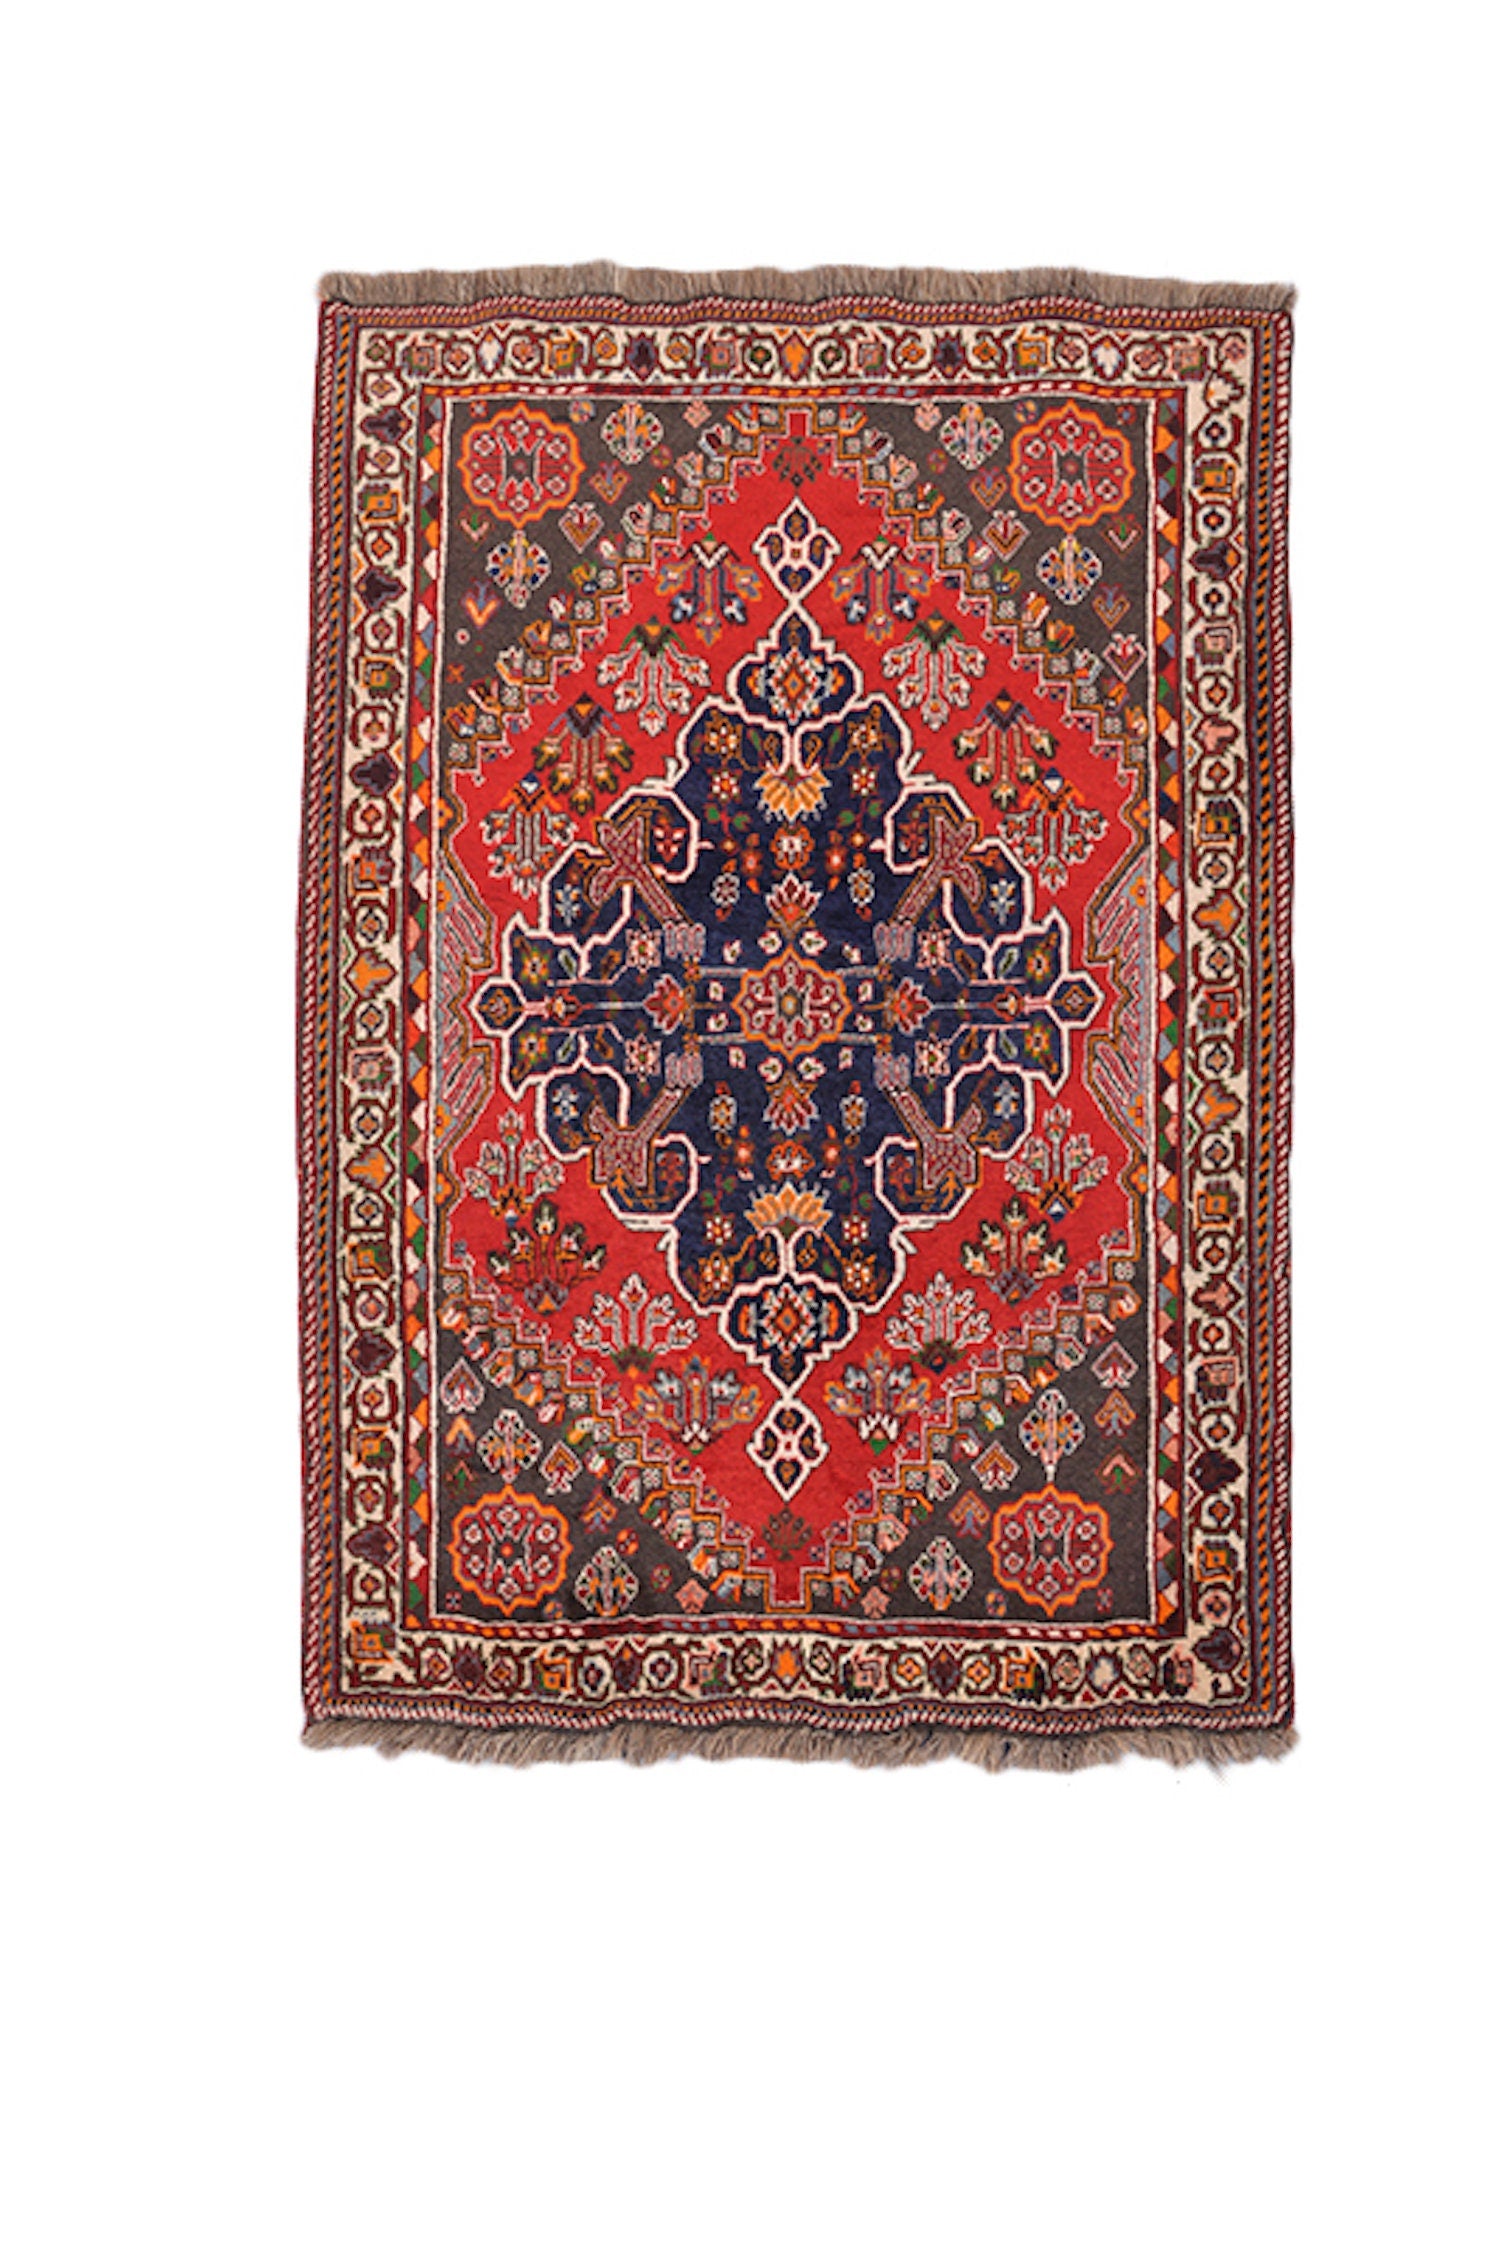 Medallion Antique Area Rug | Handmade Persian Rug | Red Navy Rug | Tribal Oriental | 5 x 6 Feet | Deep Rustic Colored Rug